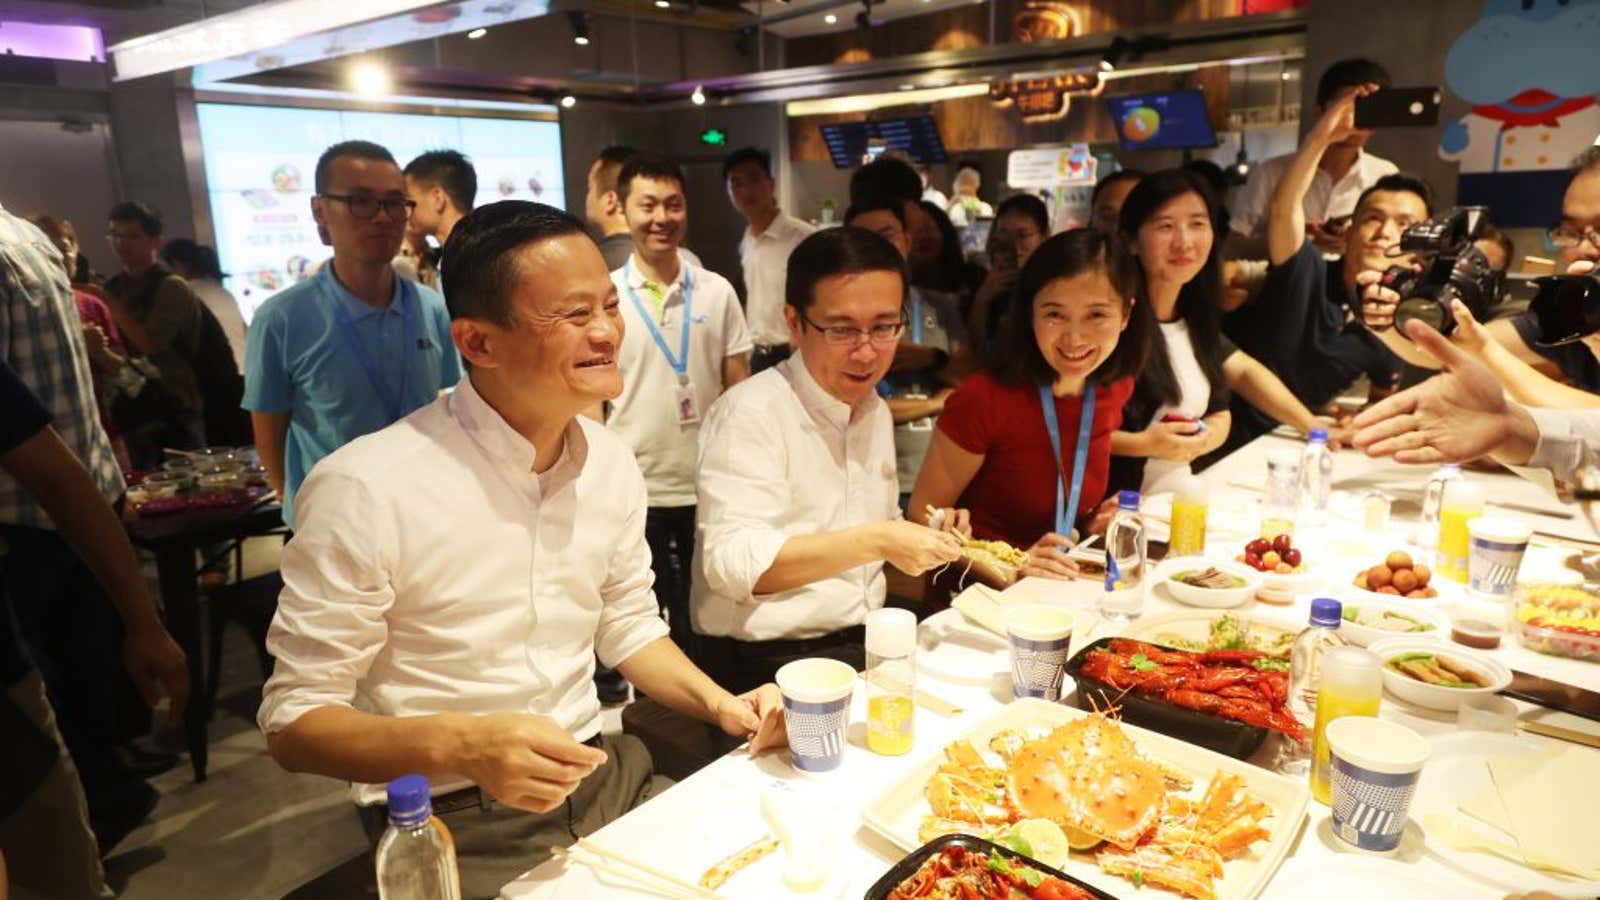 Alibaba Executive Chairman Jack Ma and CEO Daniel Zhang dine at Hema.